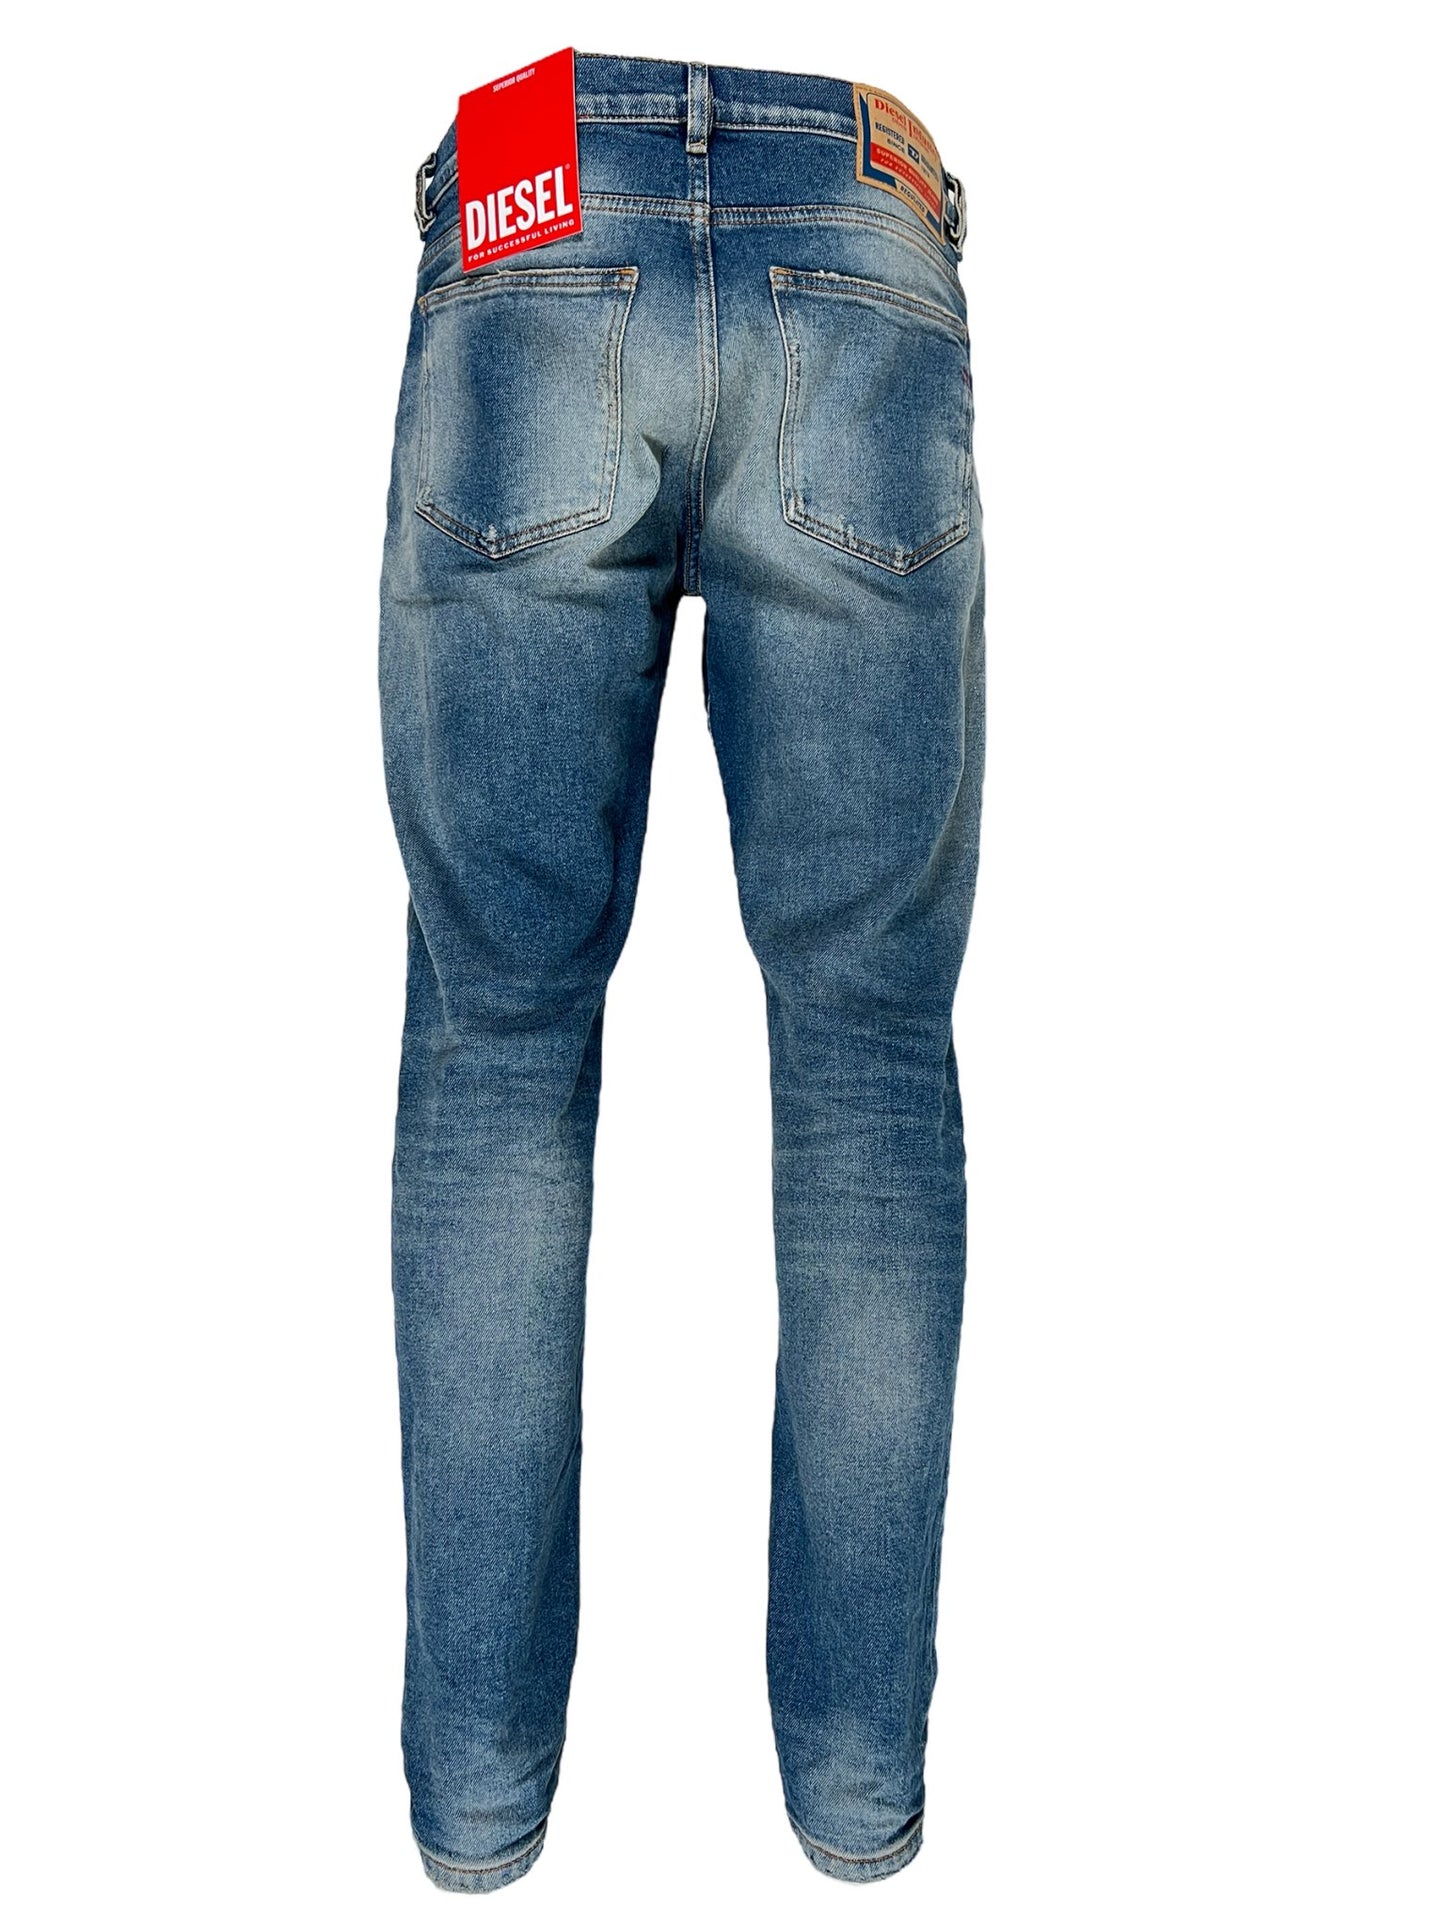 A pair of DIESEL 2019 D-STRUKT 9H55 DENIM slim-fit jeans with a label on the back.